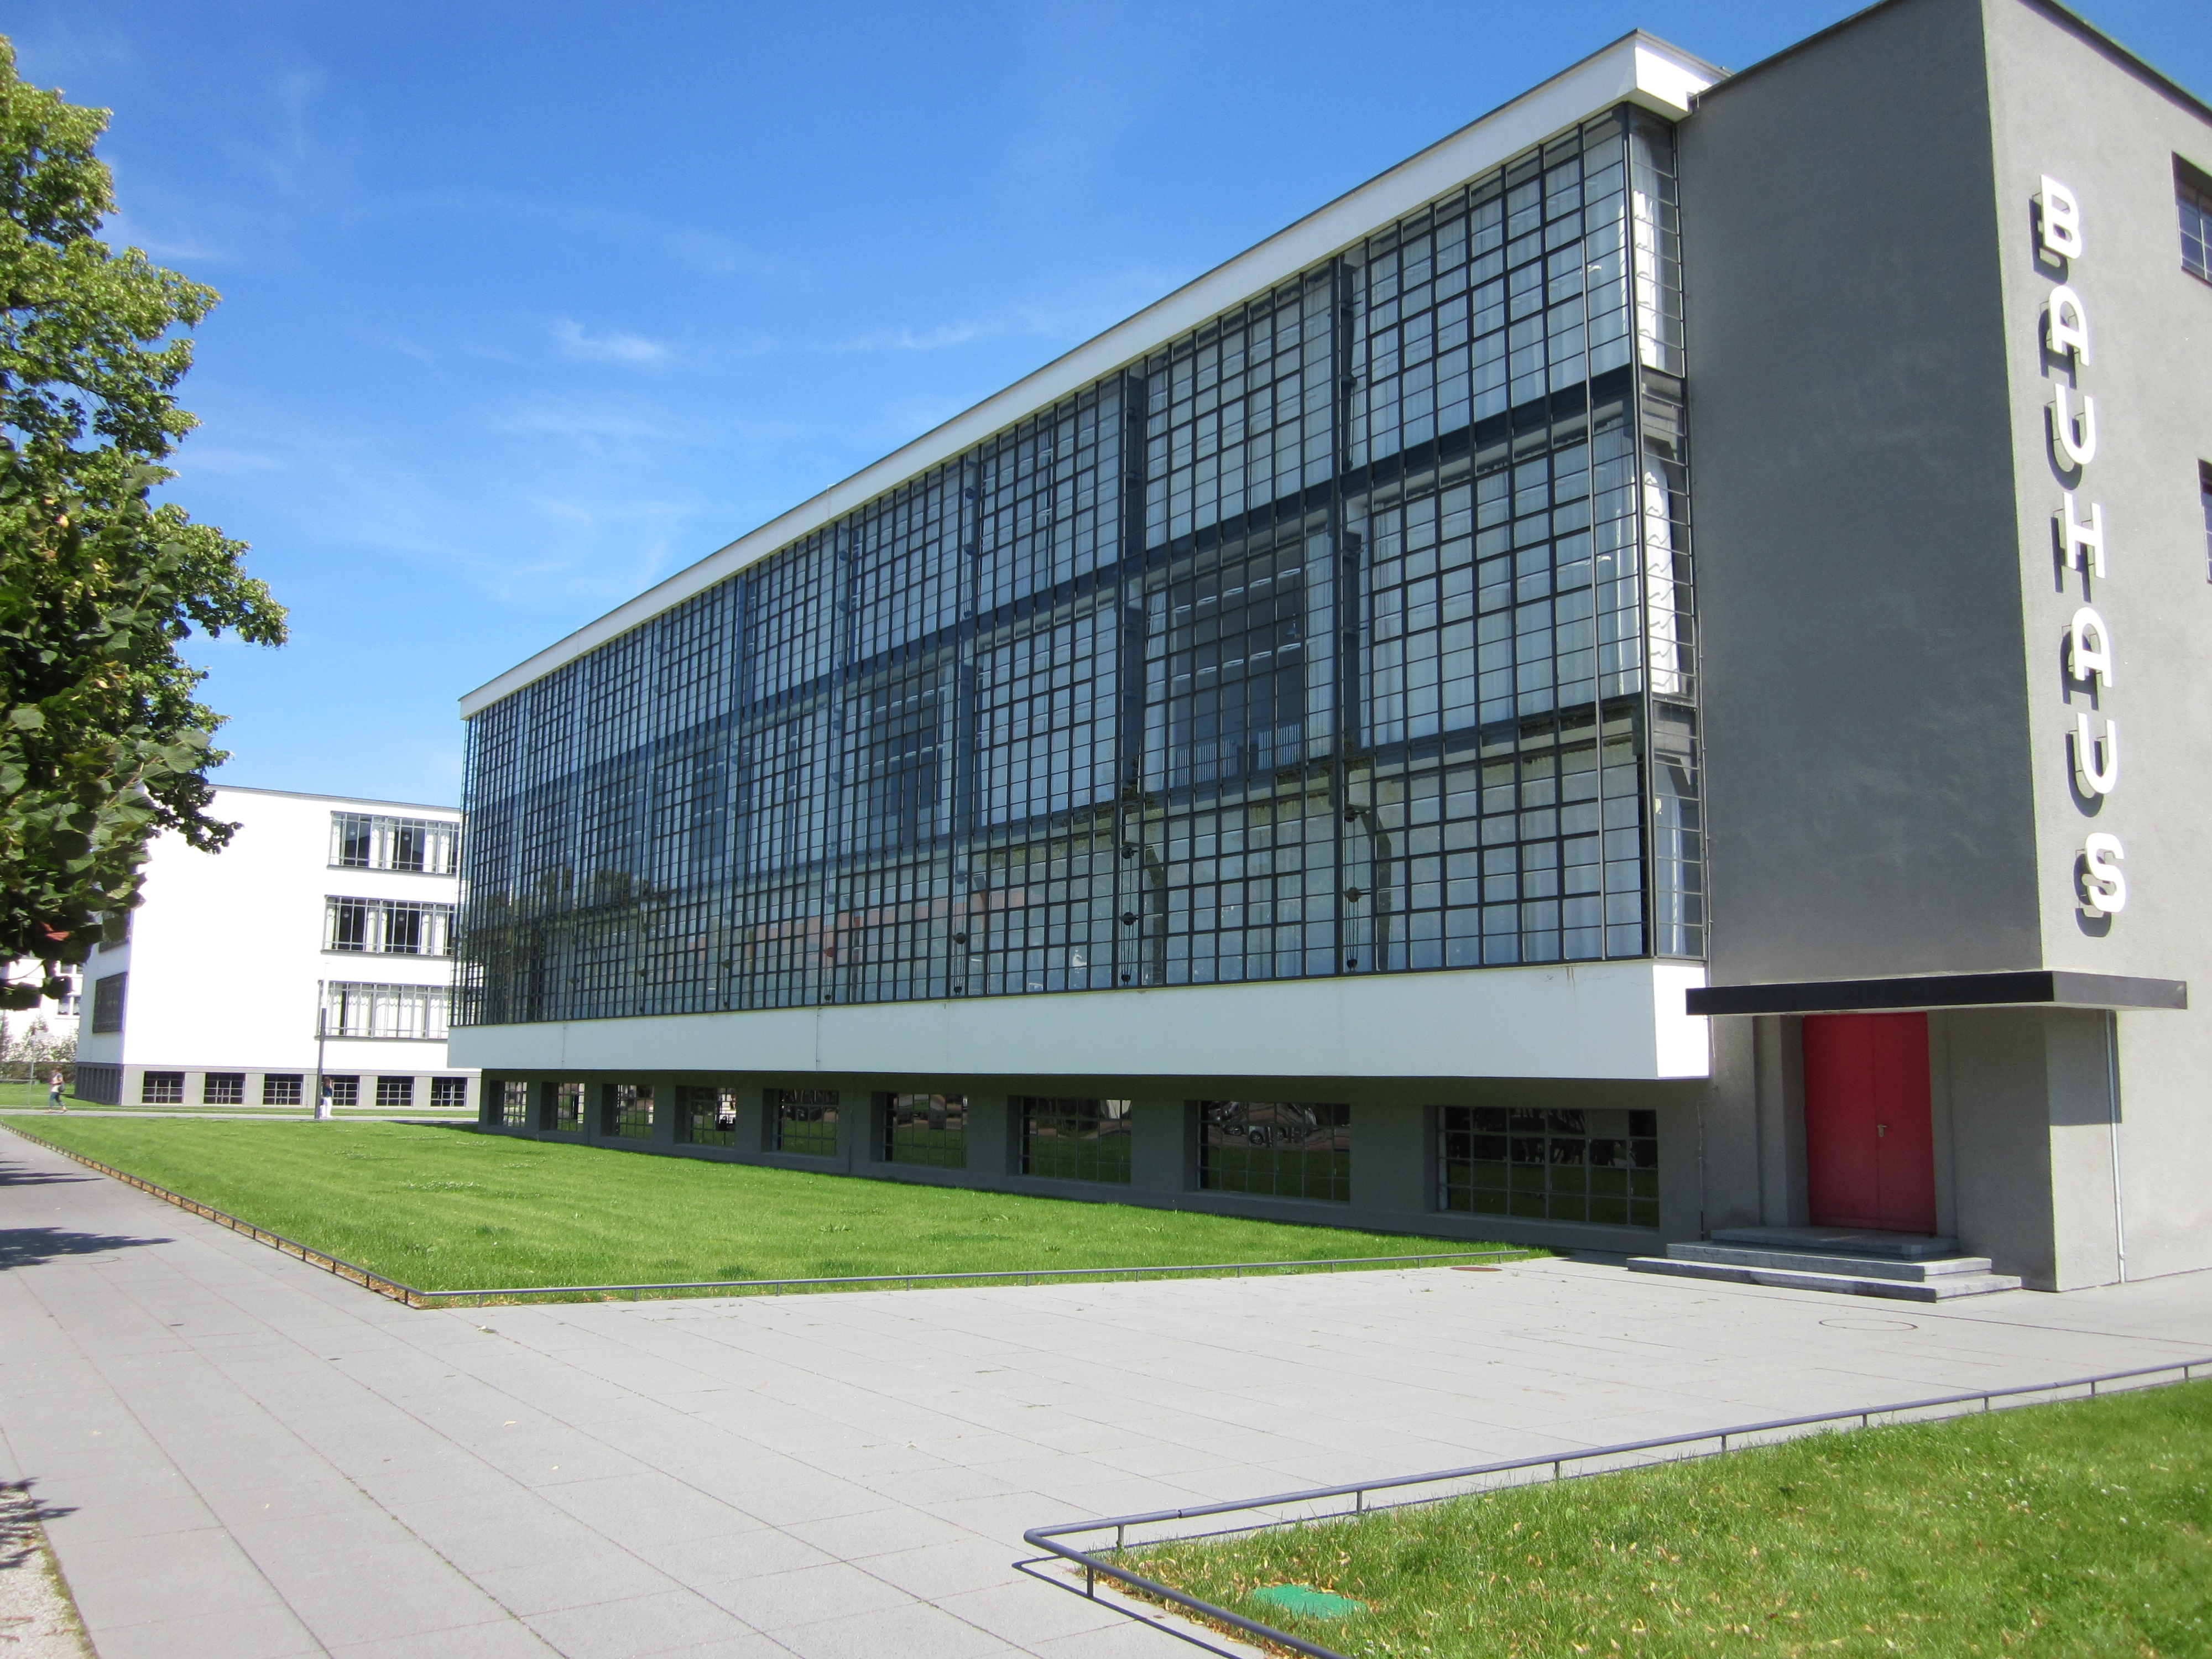 File:Bauhaus Dessau.jpg - Wikimedia Commons